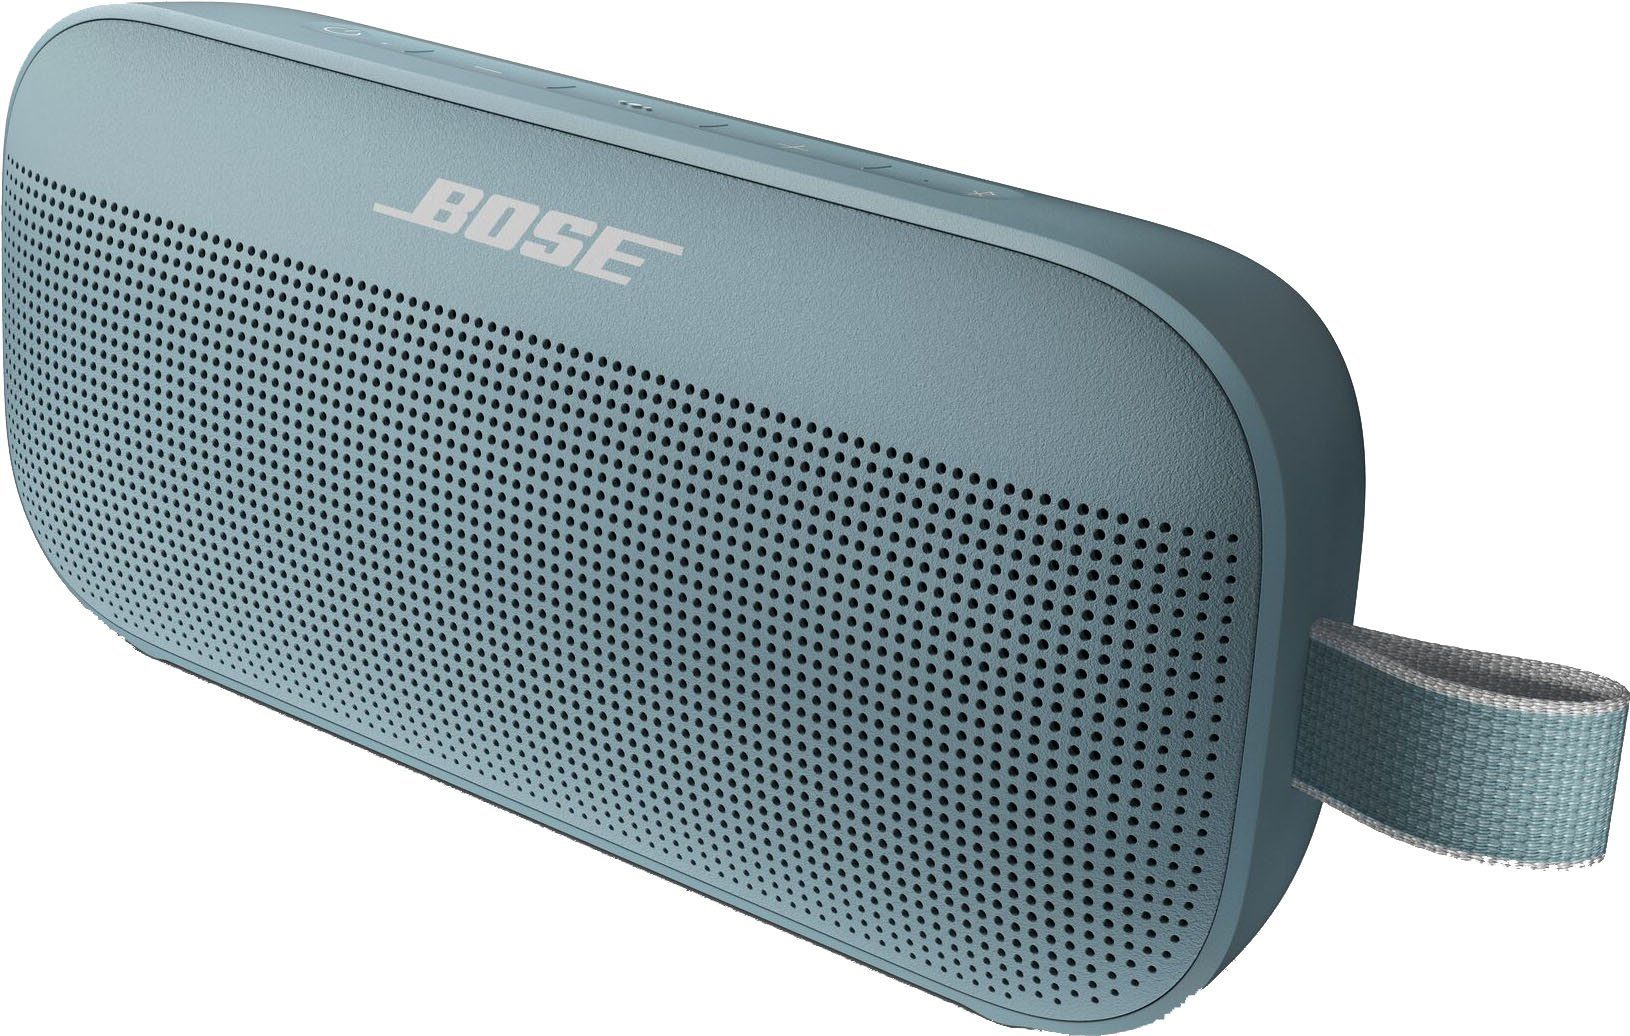 (Bluetooth) Lautsprecher Bose blau SoundLink Flex Stereo